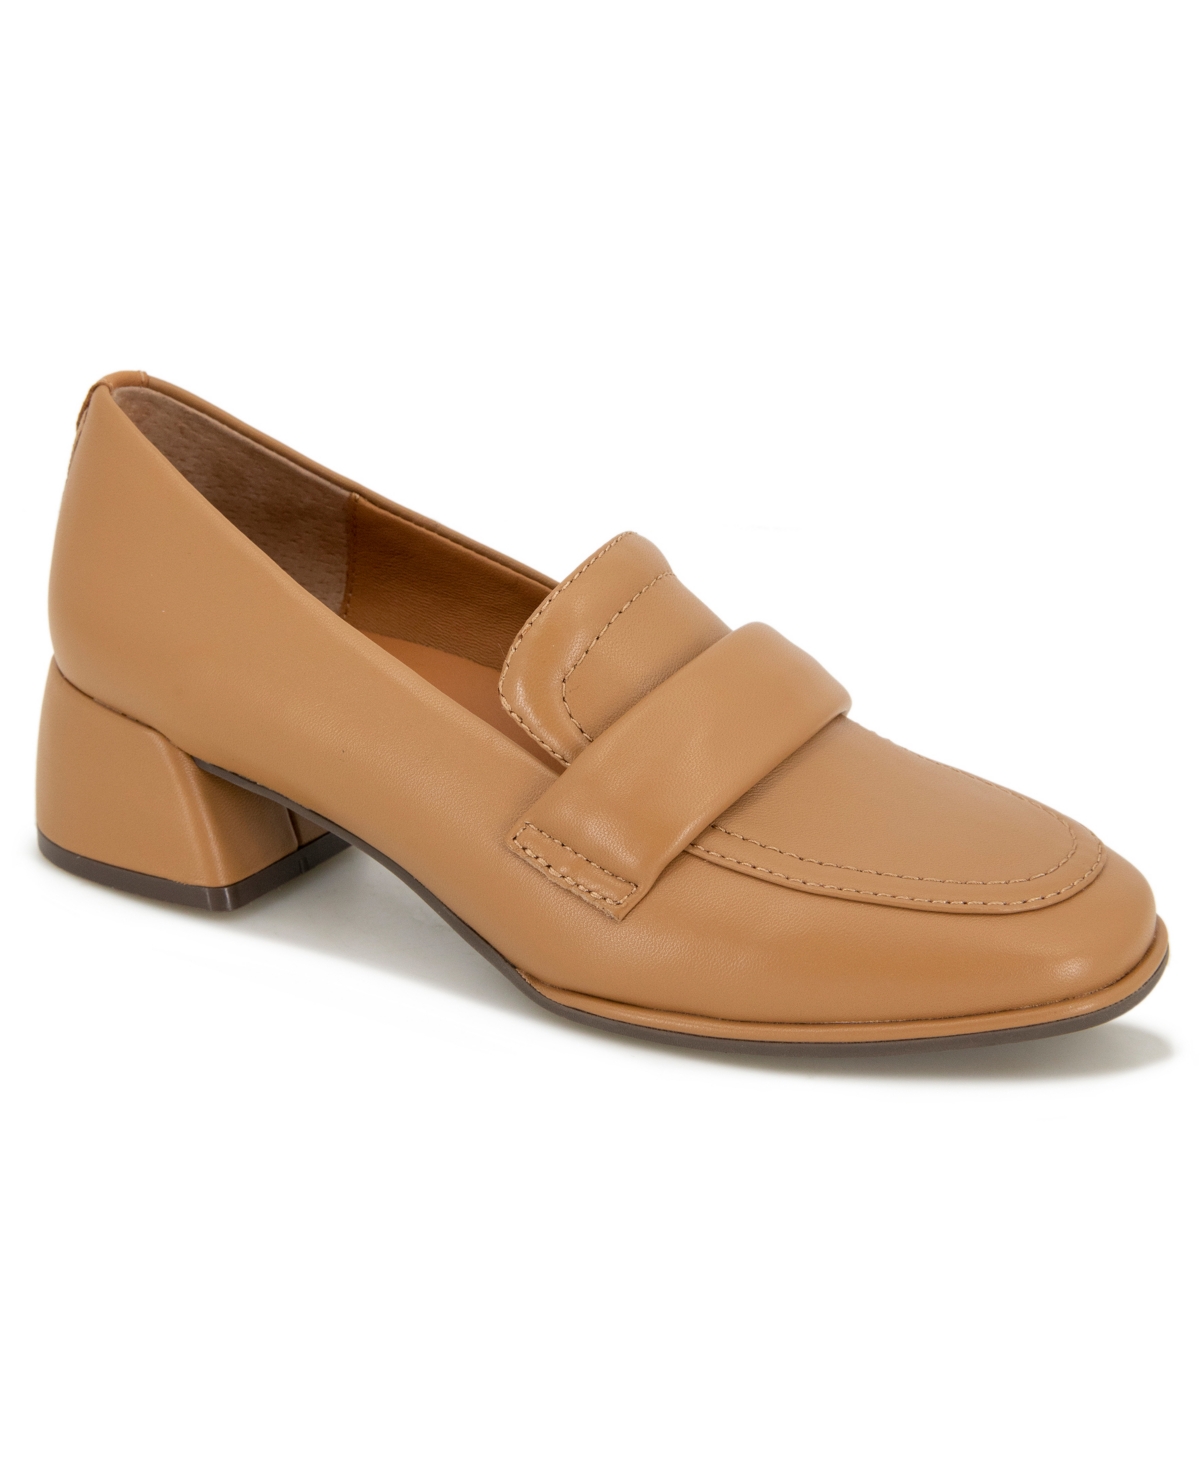 Women's Easton Block Heel Loafer - Camel Leather